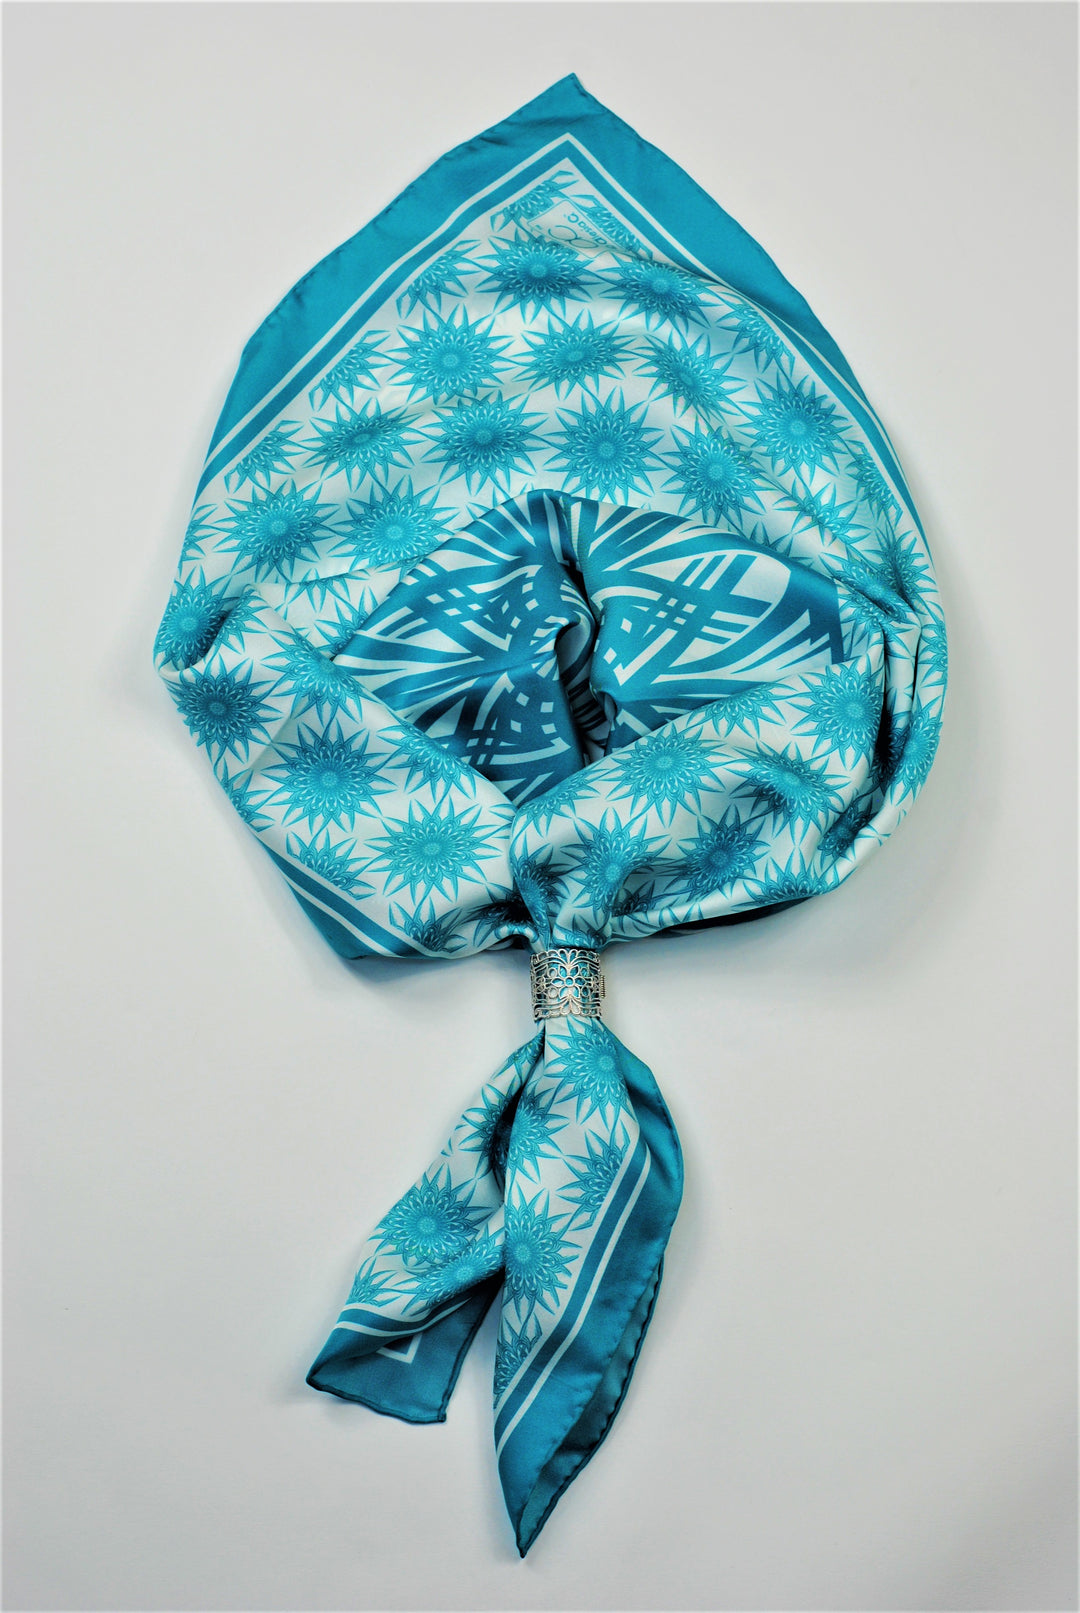 Designer Luxury Scarf WISDOM Mandala Art Pure Silk Square Scarf in Turquoise White by Alesia Chaika